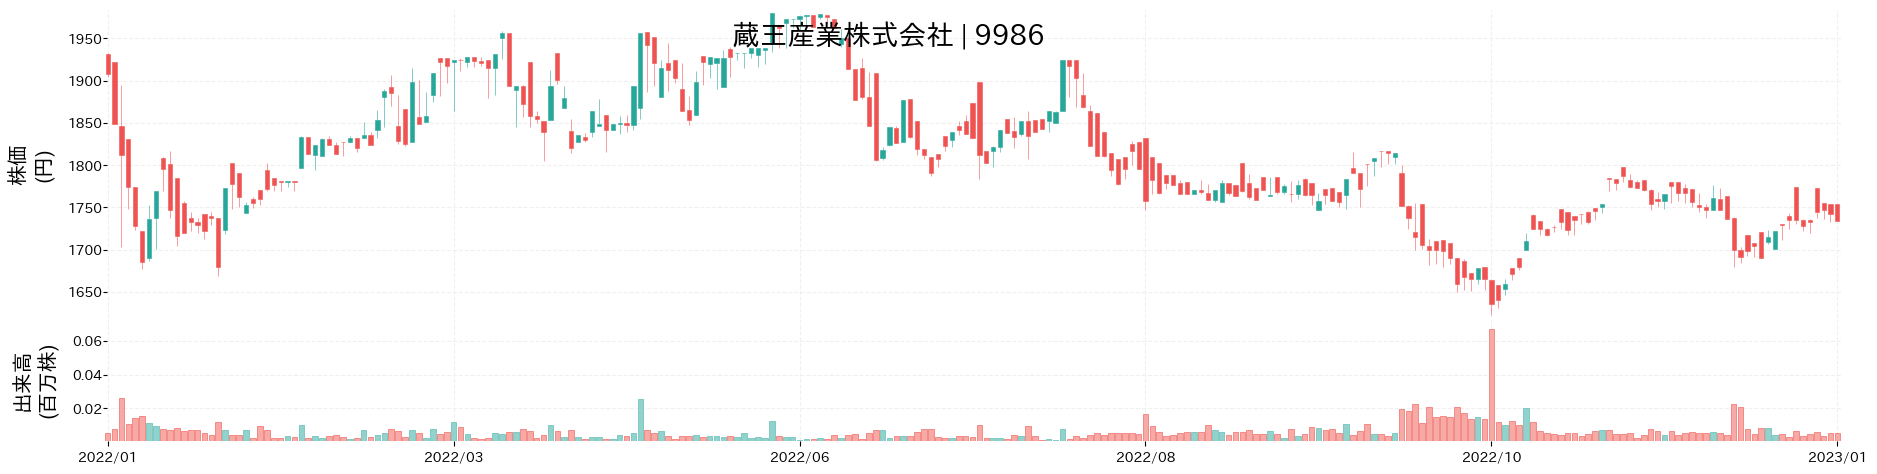 蔵王産業の株価推移(2022)